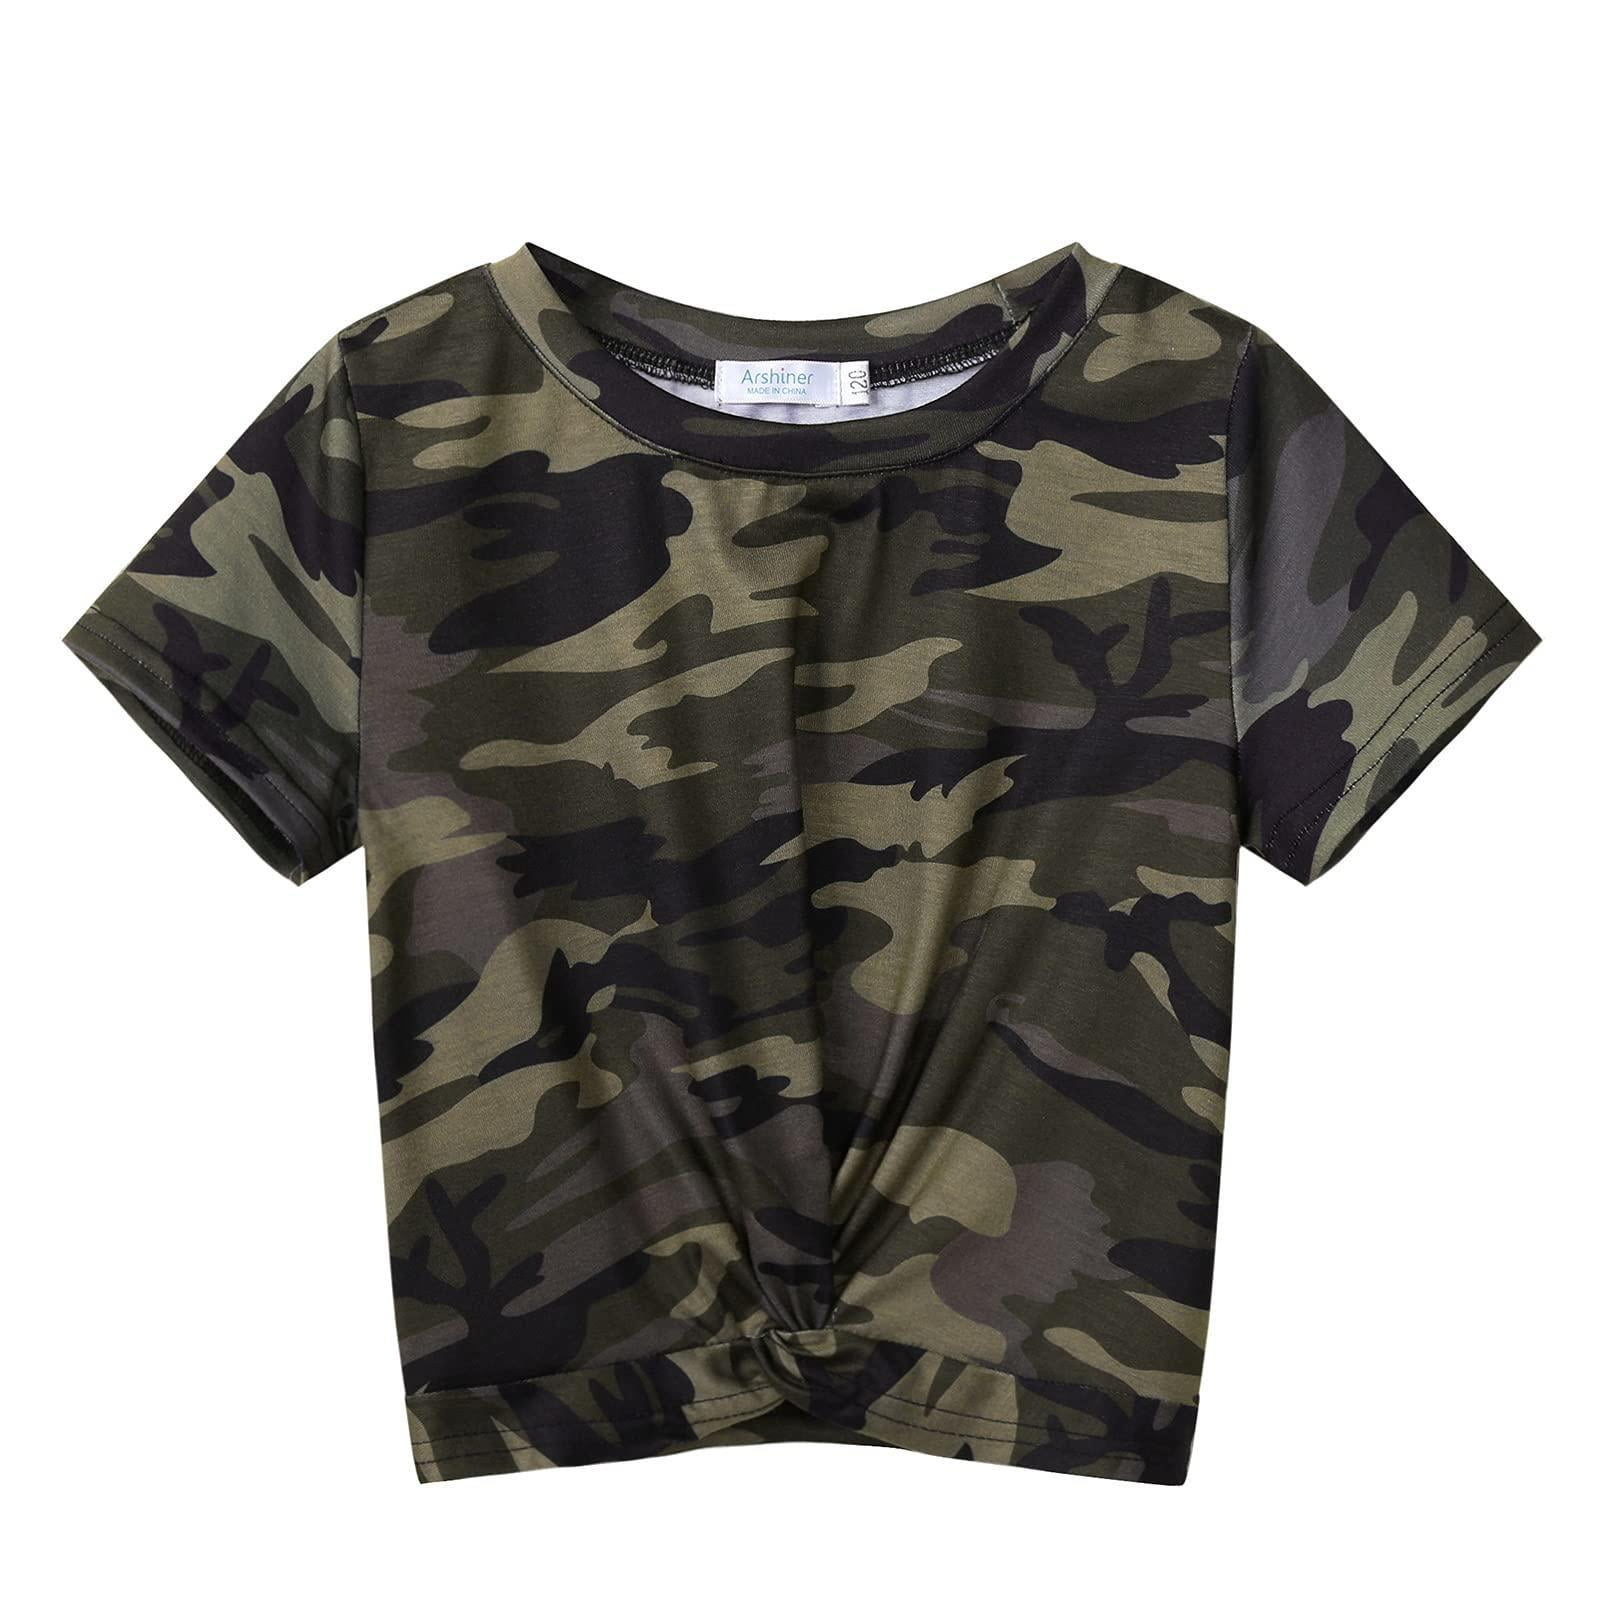 Arshiner Girls Casual Tie Dye T Shirts Short Sleeve Twist Front Tops Tee Cotton Crewneck Tee 9-10Y Walmart.com